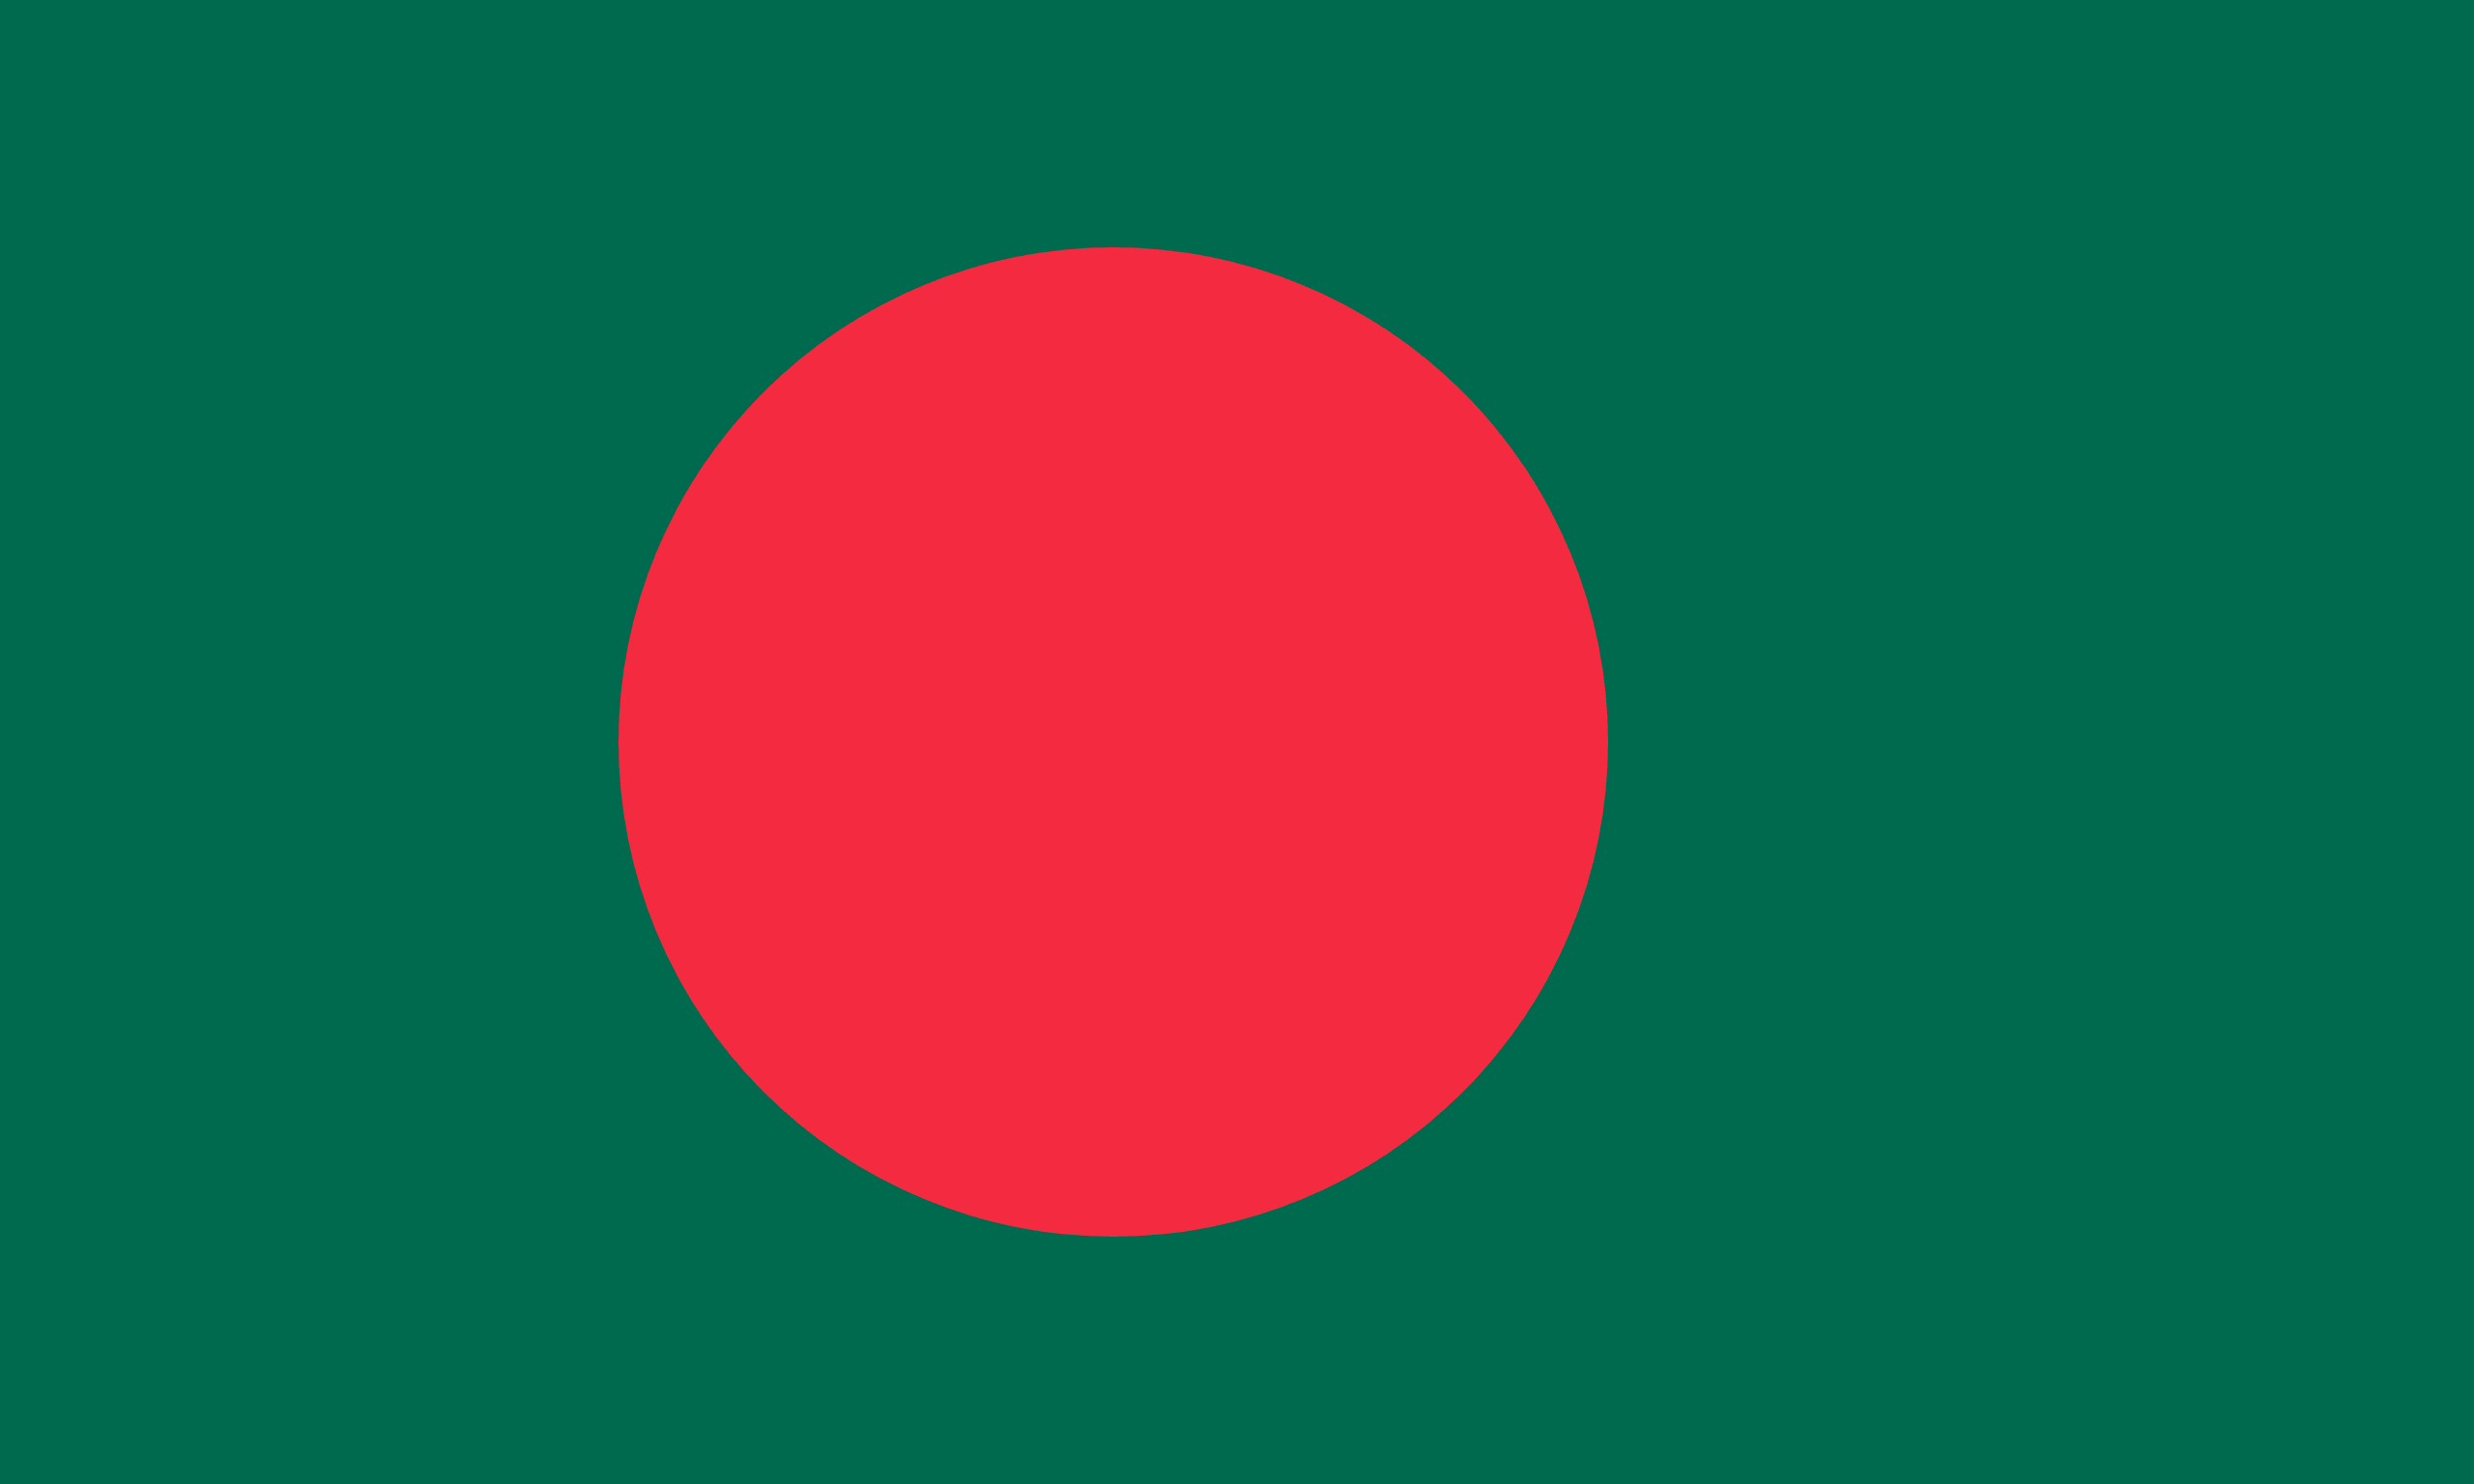 Download Flag of Bangladesh image